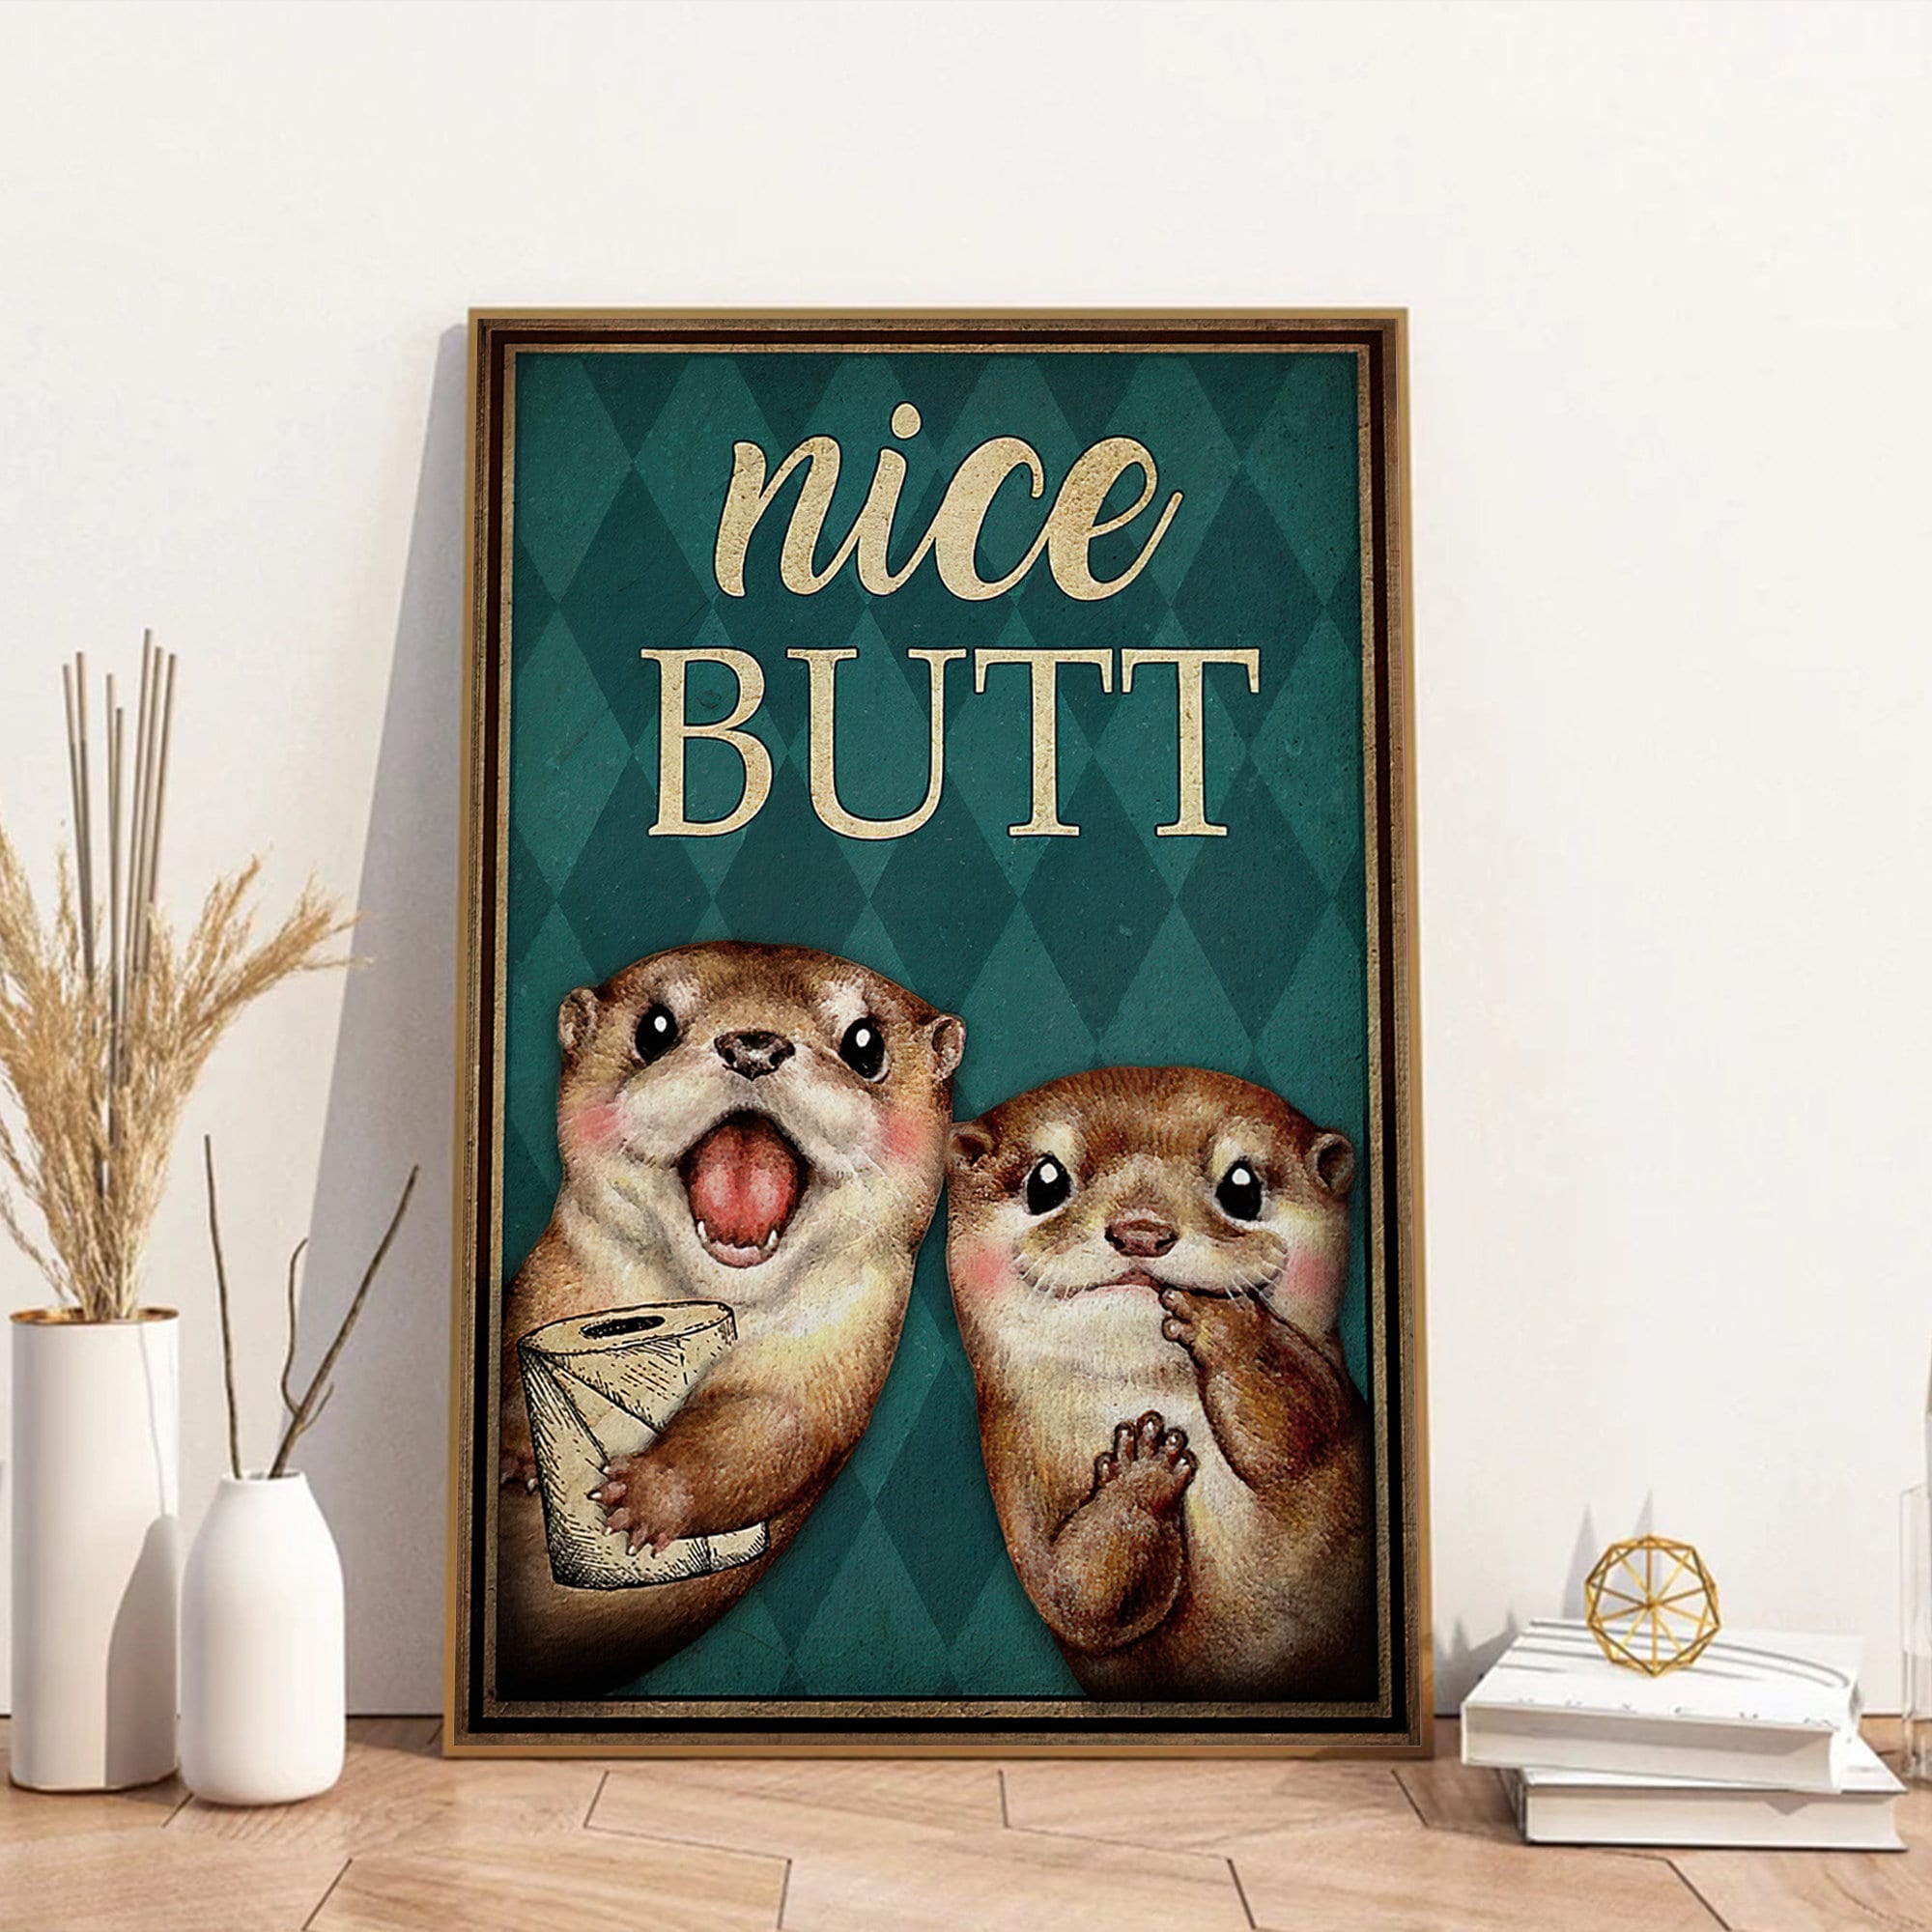 Discover Otter Nice Butt Poster, Cute Otter Art Print, Otter Bathroom Funny Wall Decor, Gift For Otter Lovers, No Frame